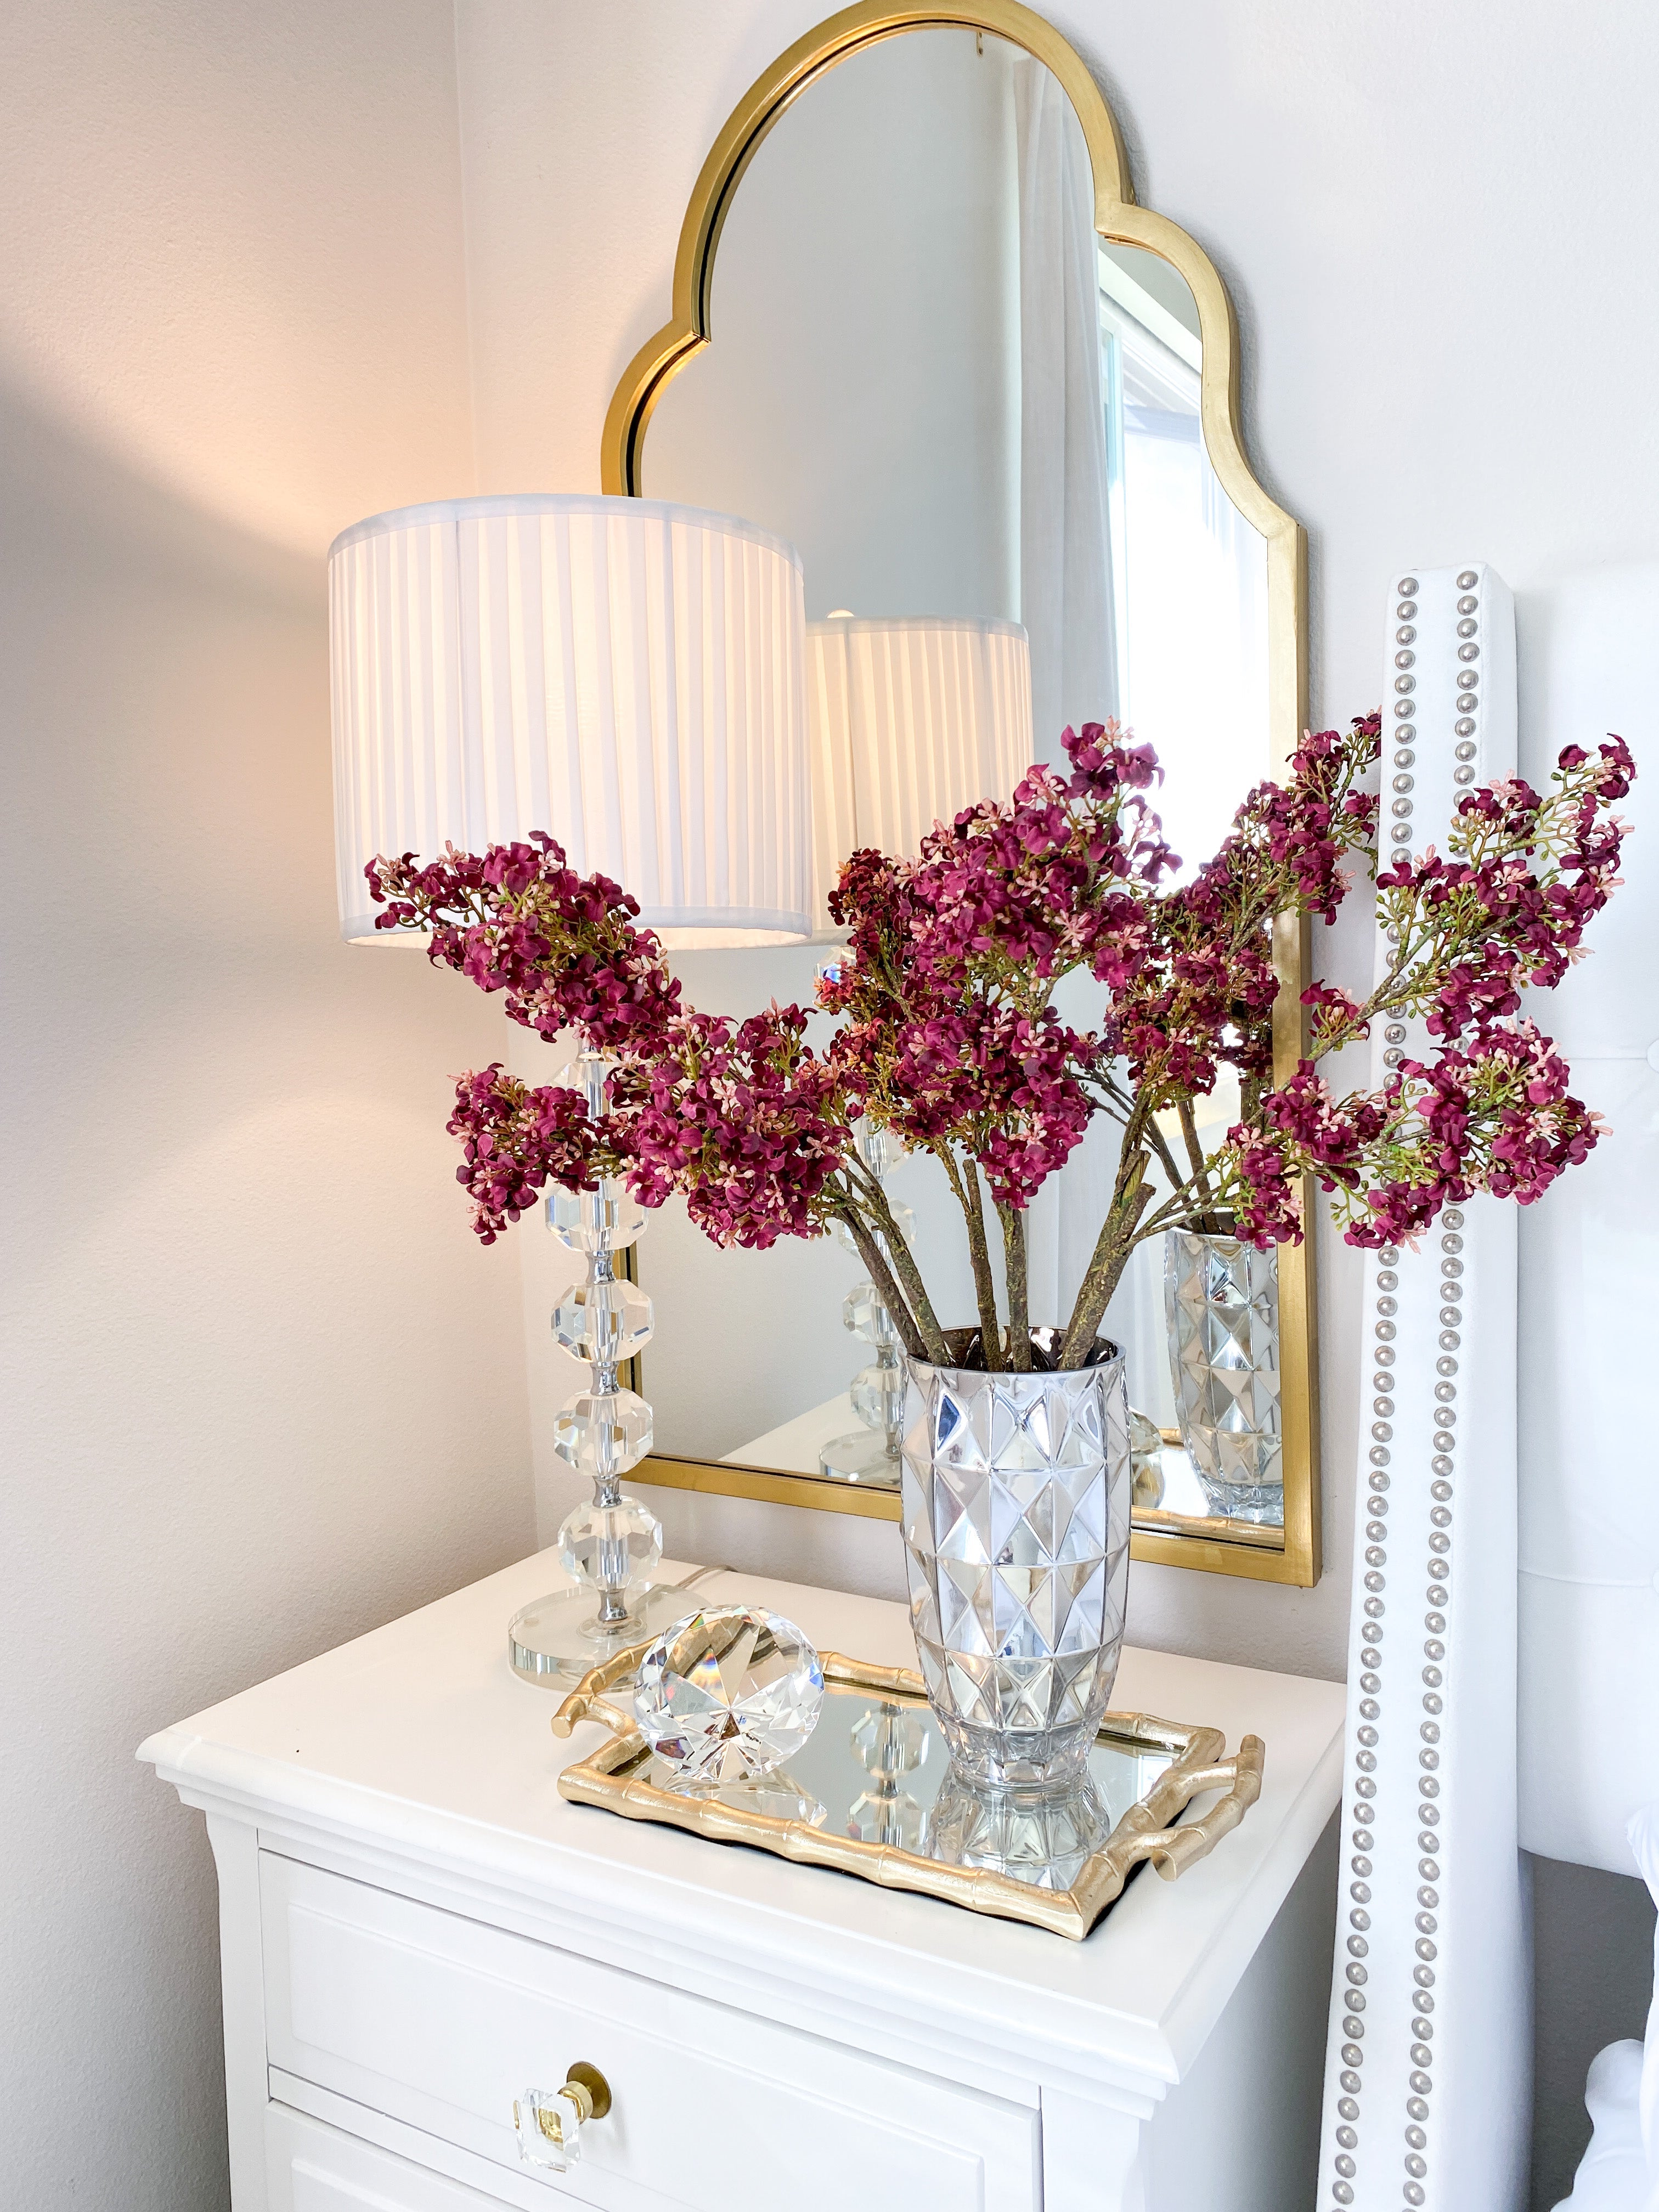 Artificial Plum Lilac Cross Cherry Blossom Stems ( Pack of 3 ) - HTS HOME DECOR